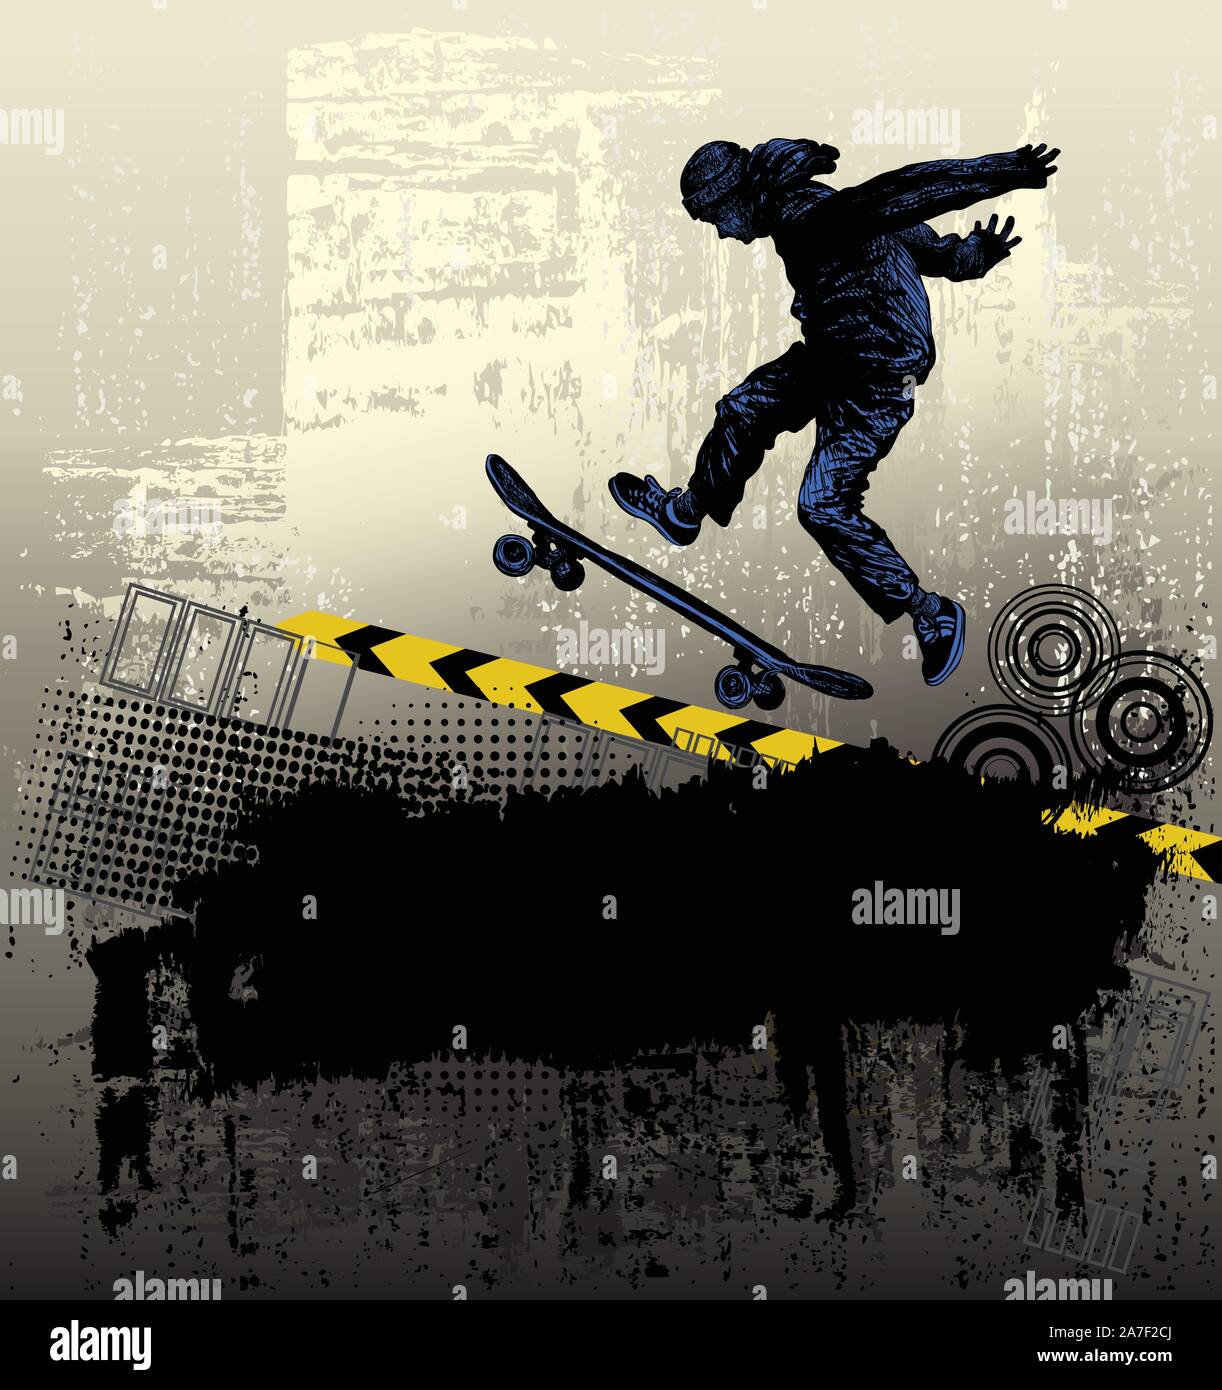 Skateboarding. Extreme sports. Skateboarder street sport. Stock Vector